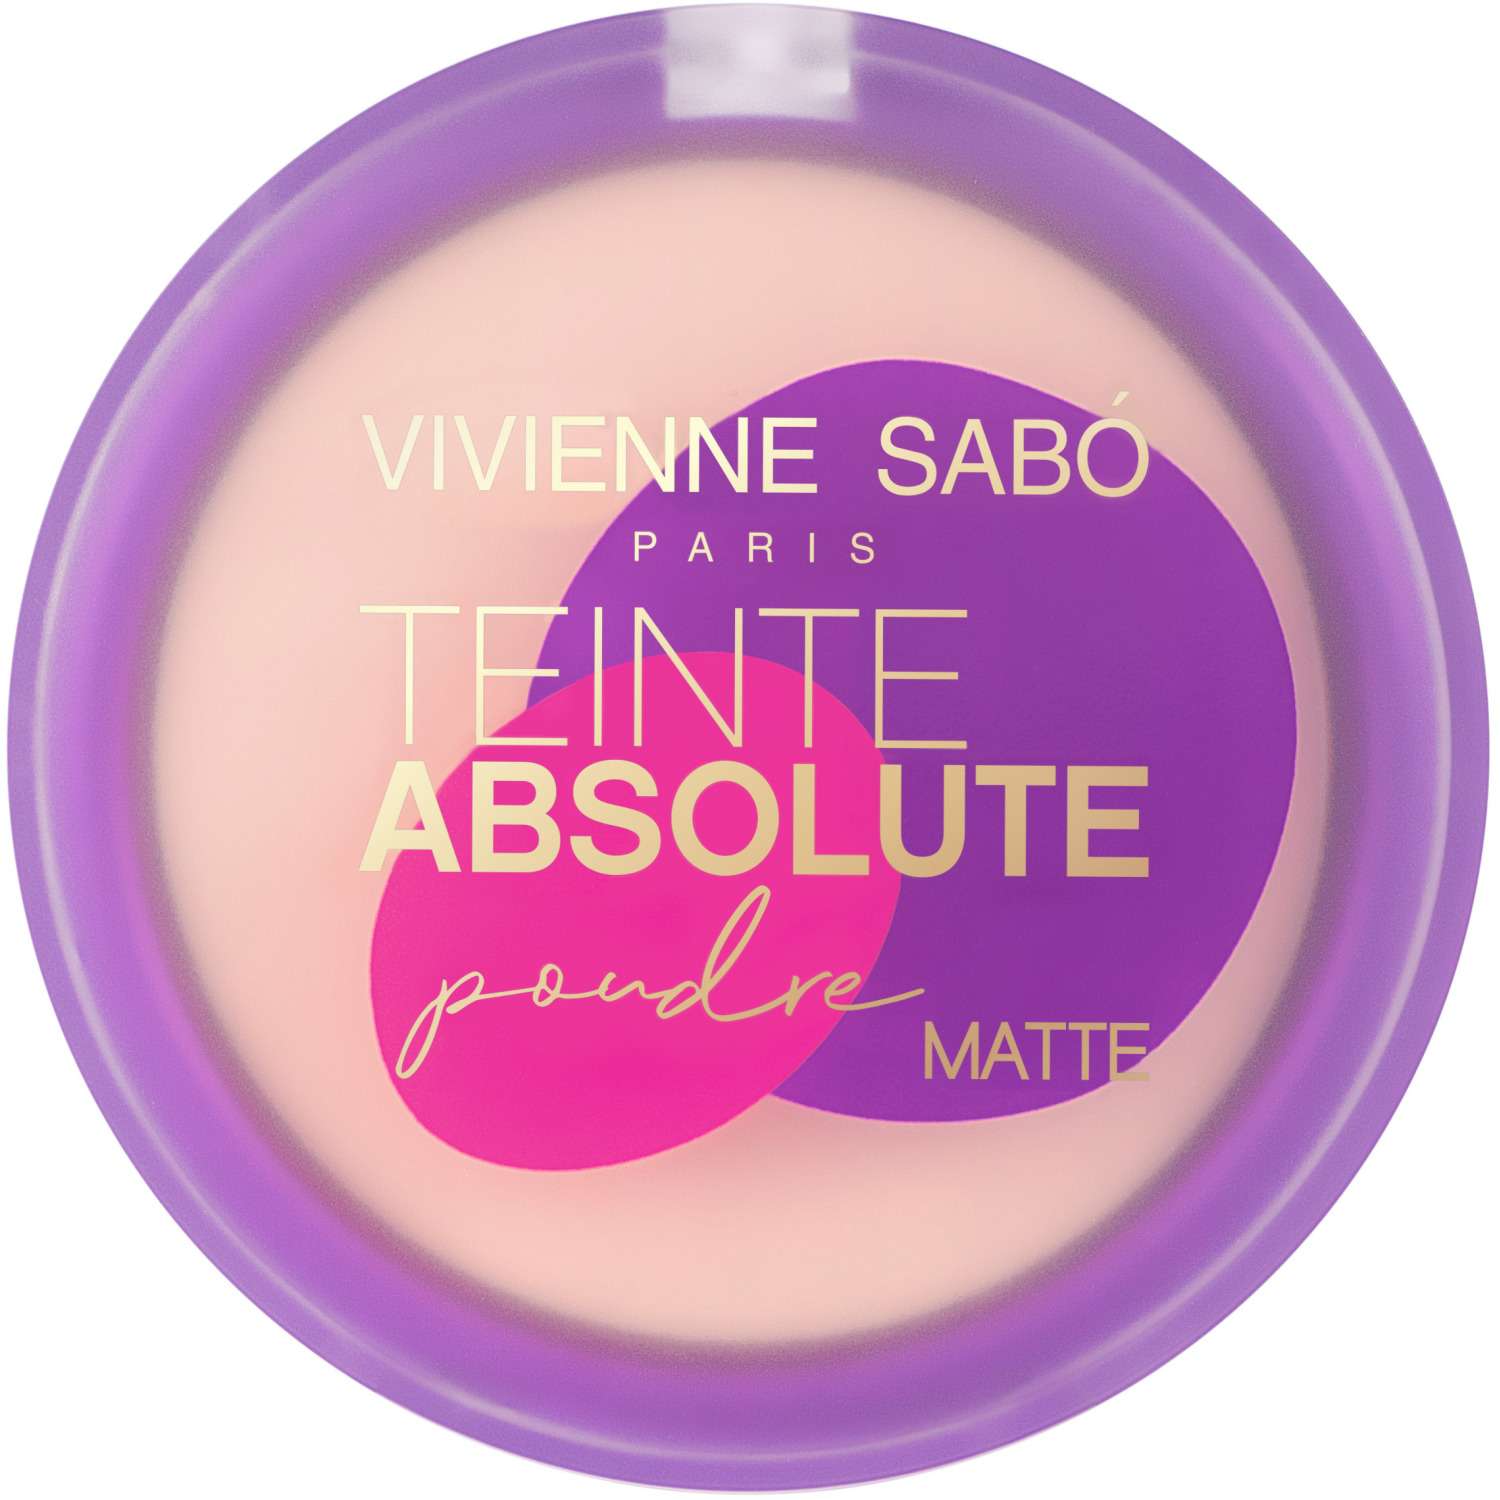 Пудра Vivienne Sabo Teinte Absolute matte подходит для проблемной кожи тон 01 розово-бежевый 6 г - фото 1